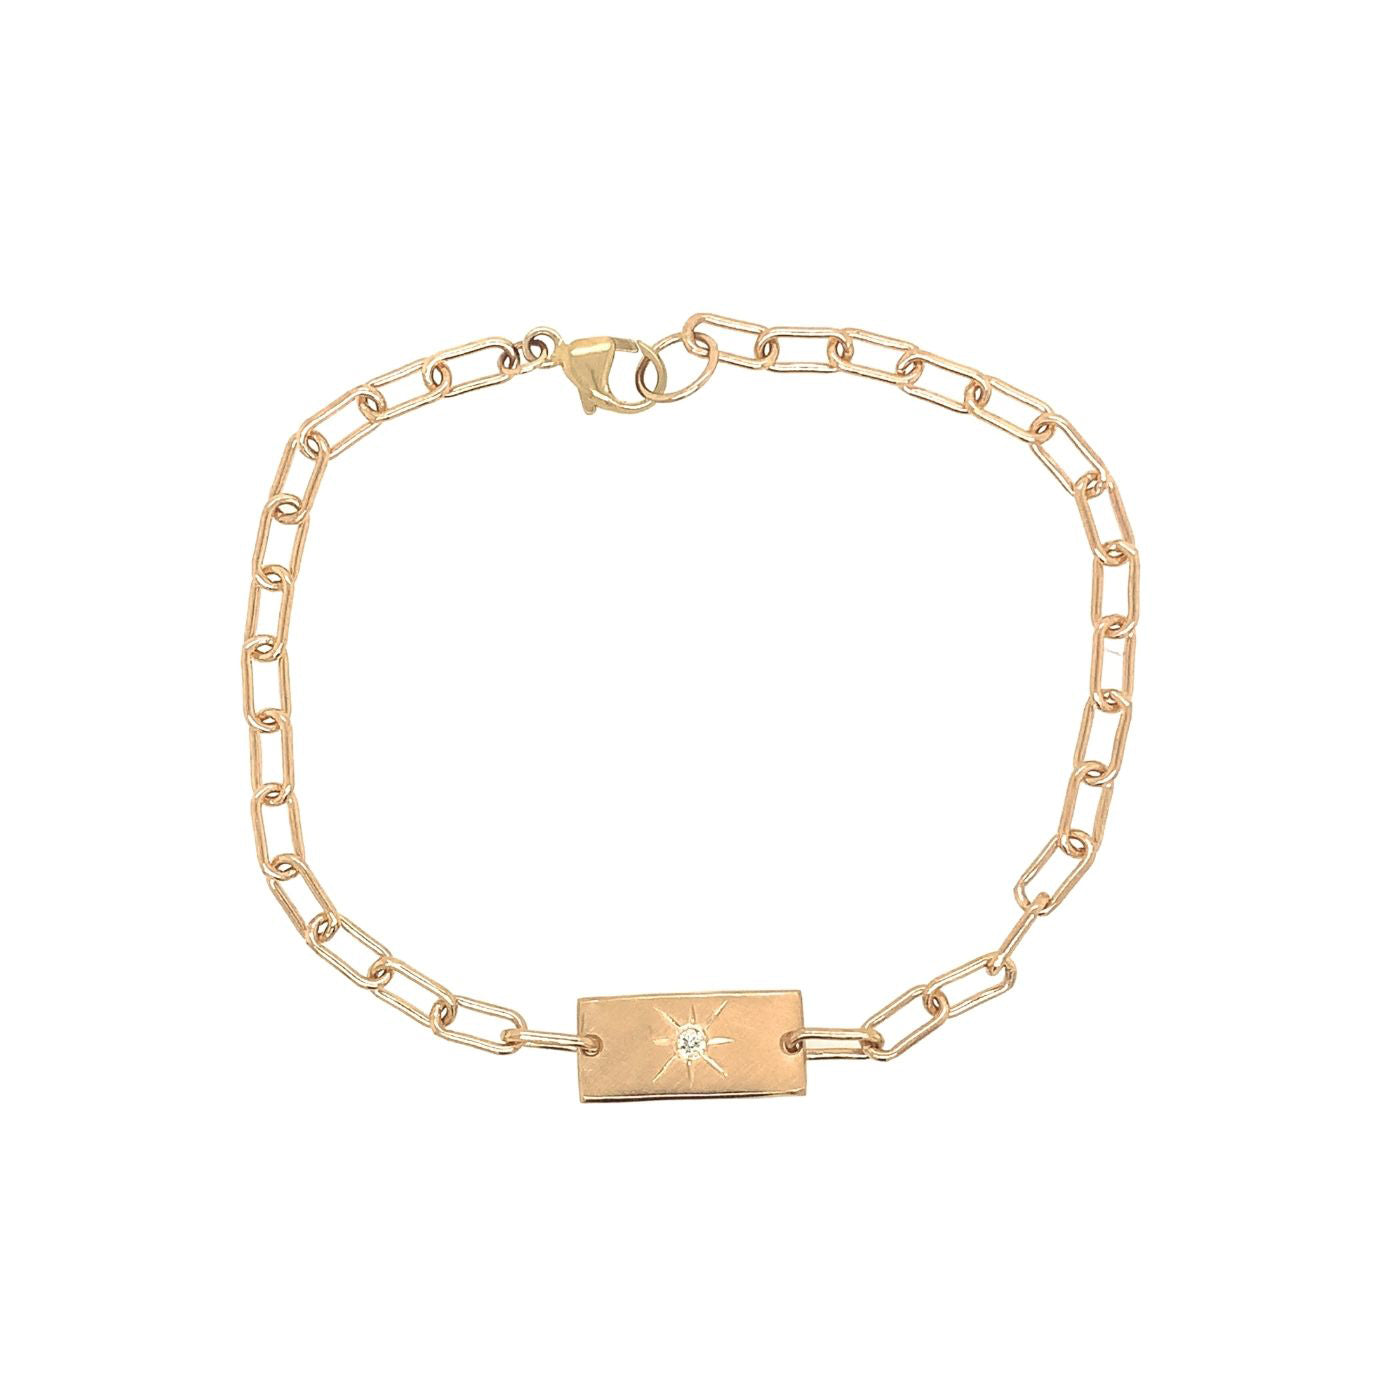 Louis Vuitton Gamble Crystal Gold Tone Bracelet Jewelry